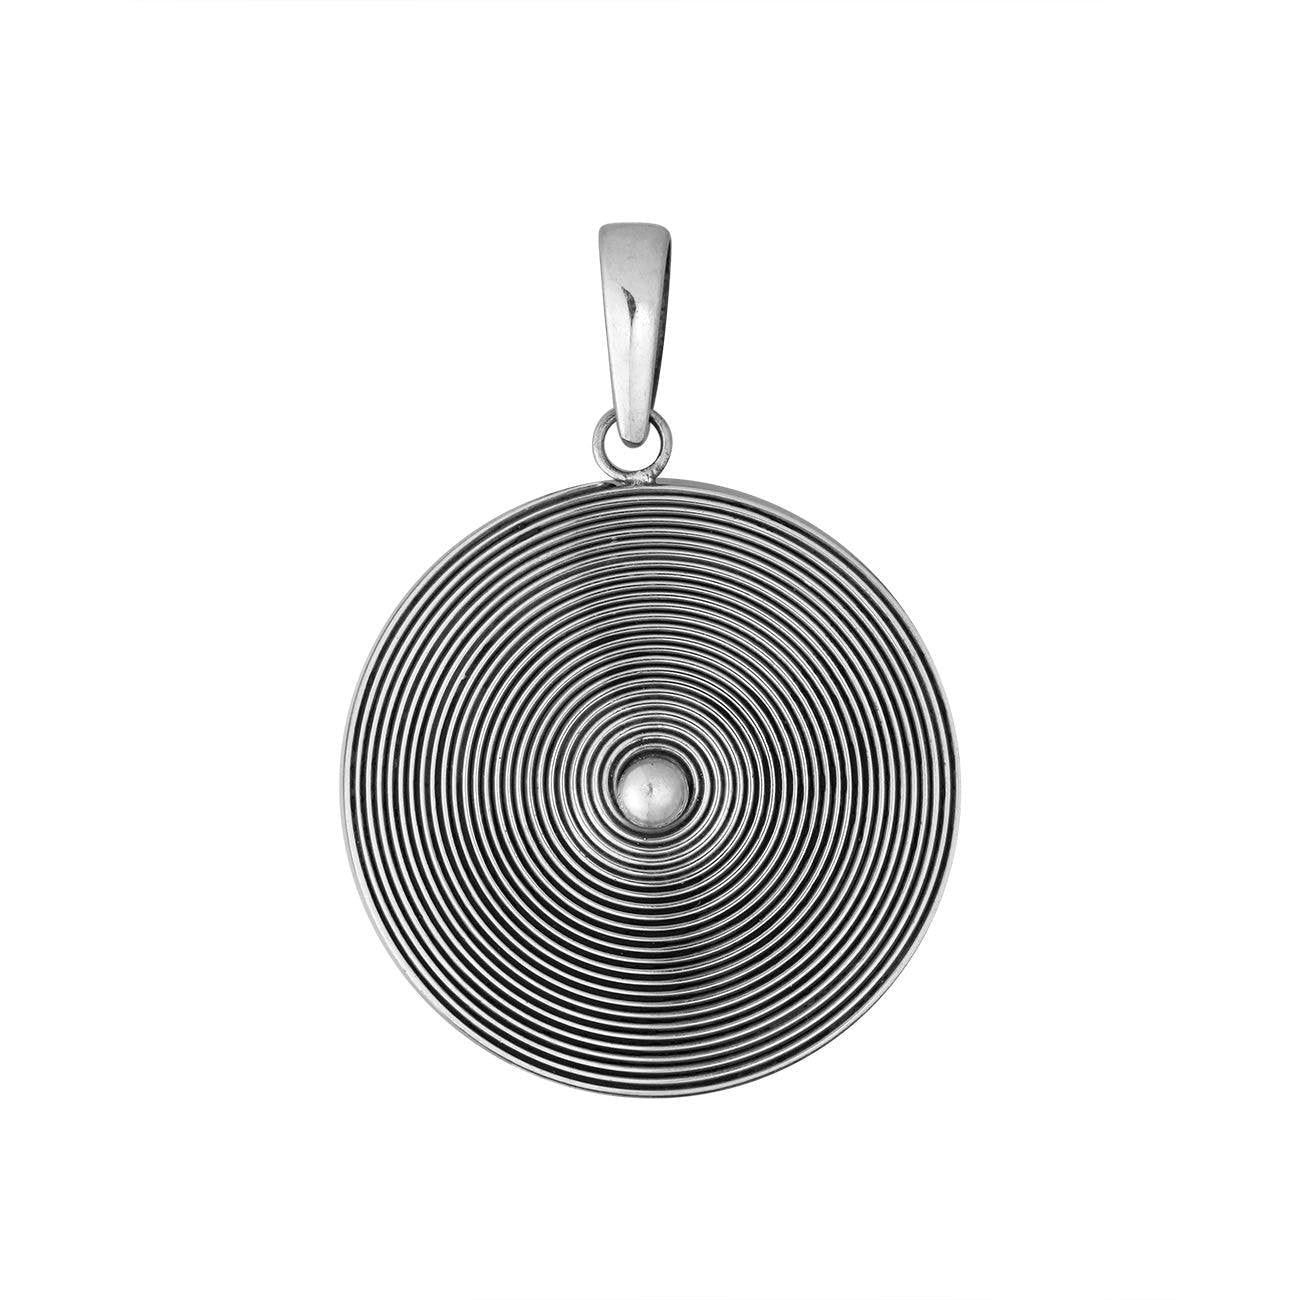 Handmade 925 Sterling Silver Oxidized Spiral Circle Pendant - Inspiring Jewellery